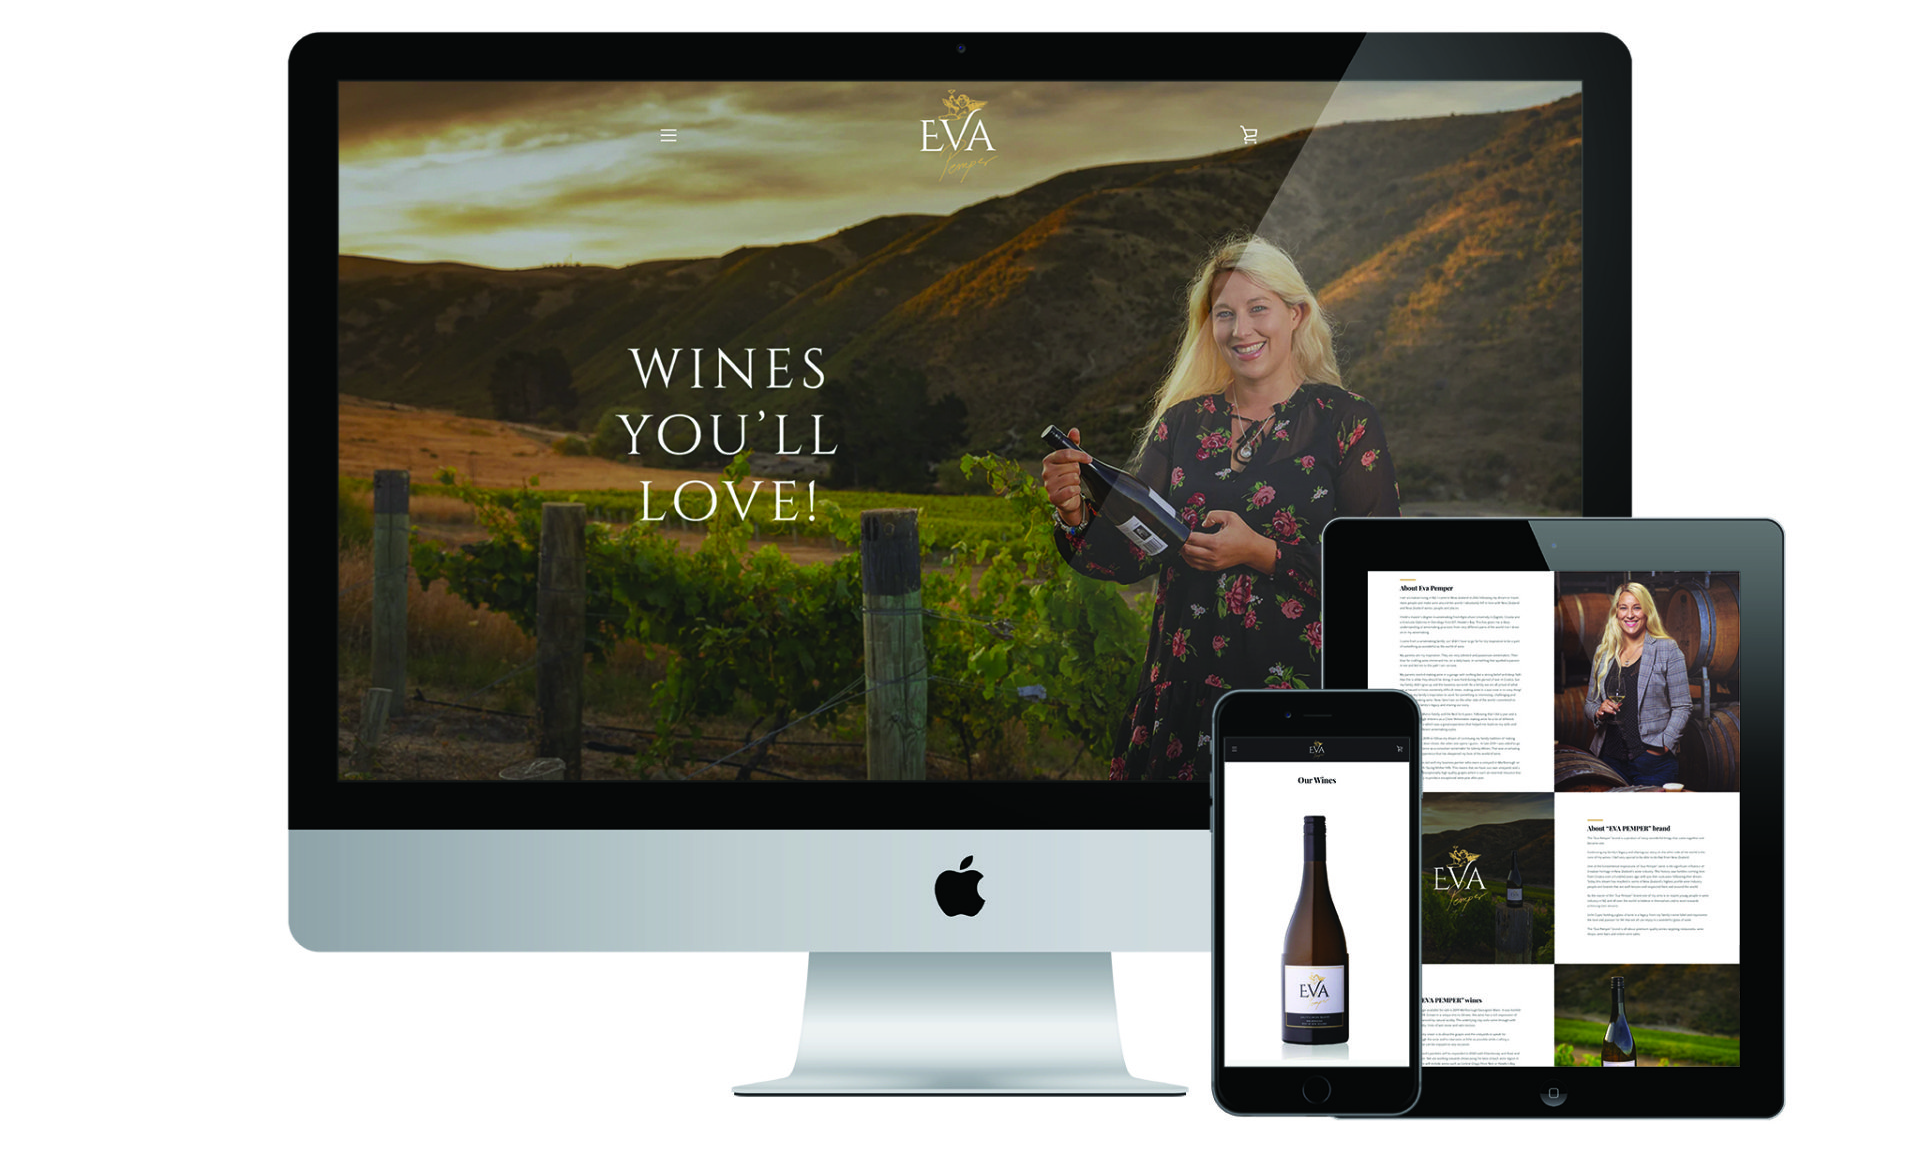 Eva Pemper Wines website designed by Vanilla Hayes creative graphic design  studio in Blenheim, Marlborough, New Zealand